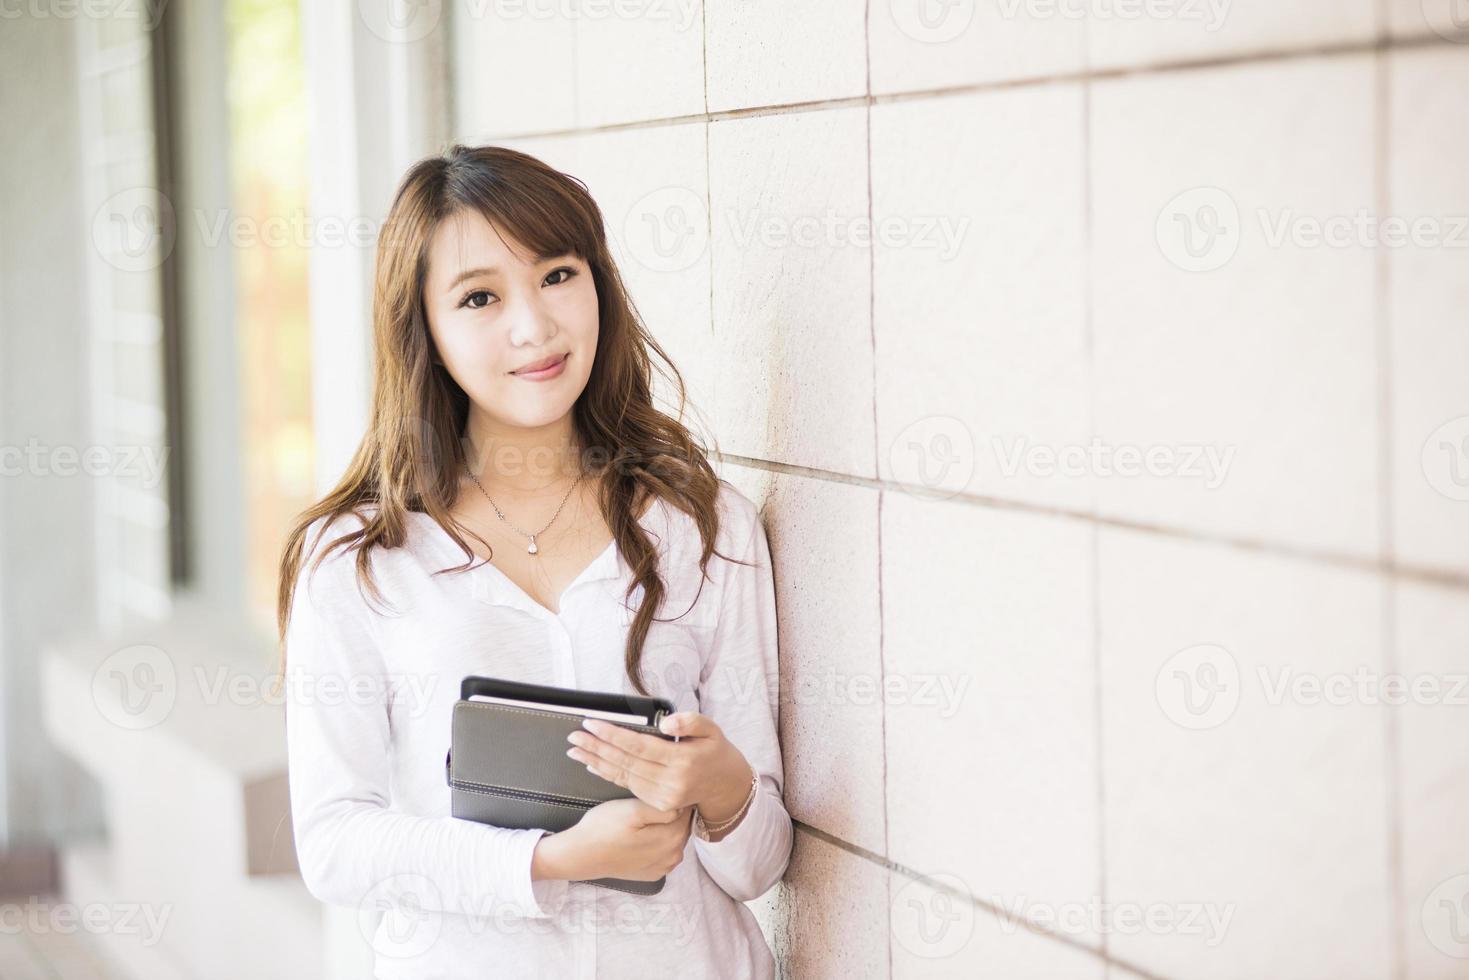 estudante de faculdade ou universidade asiática feminina foto